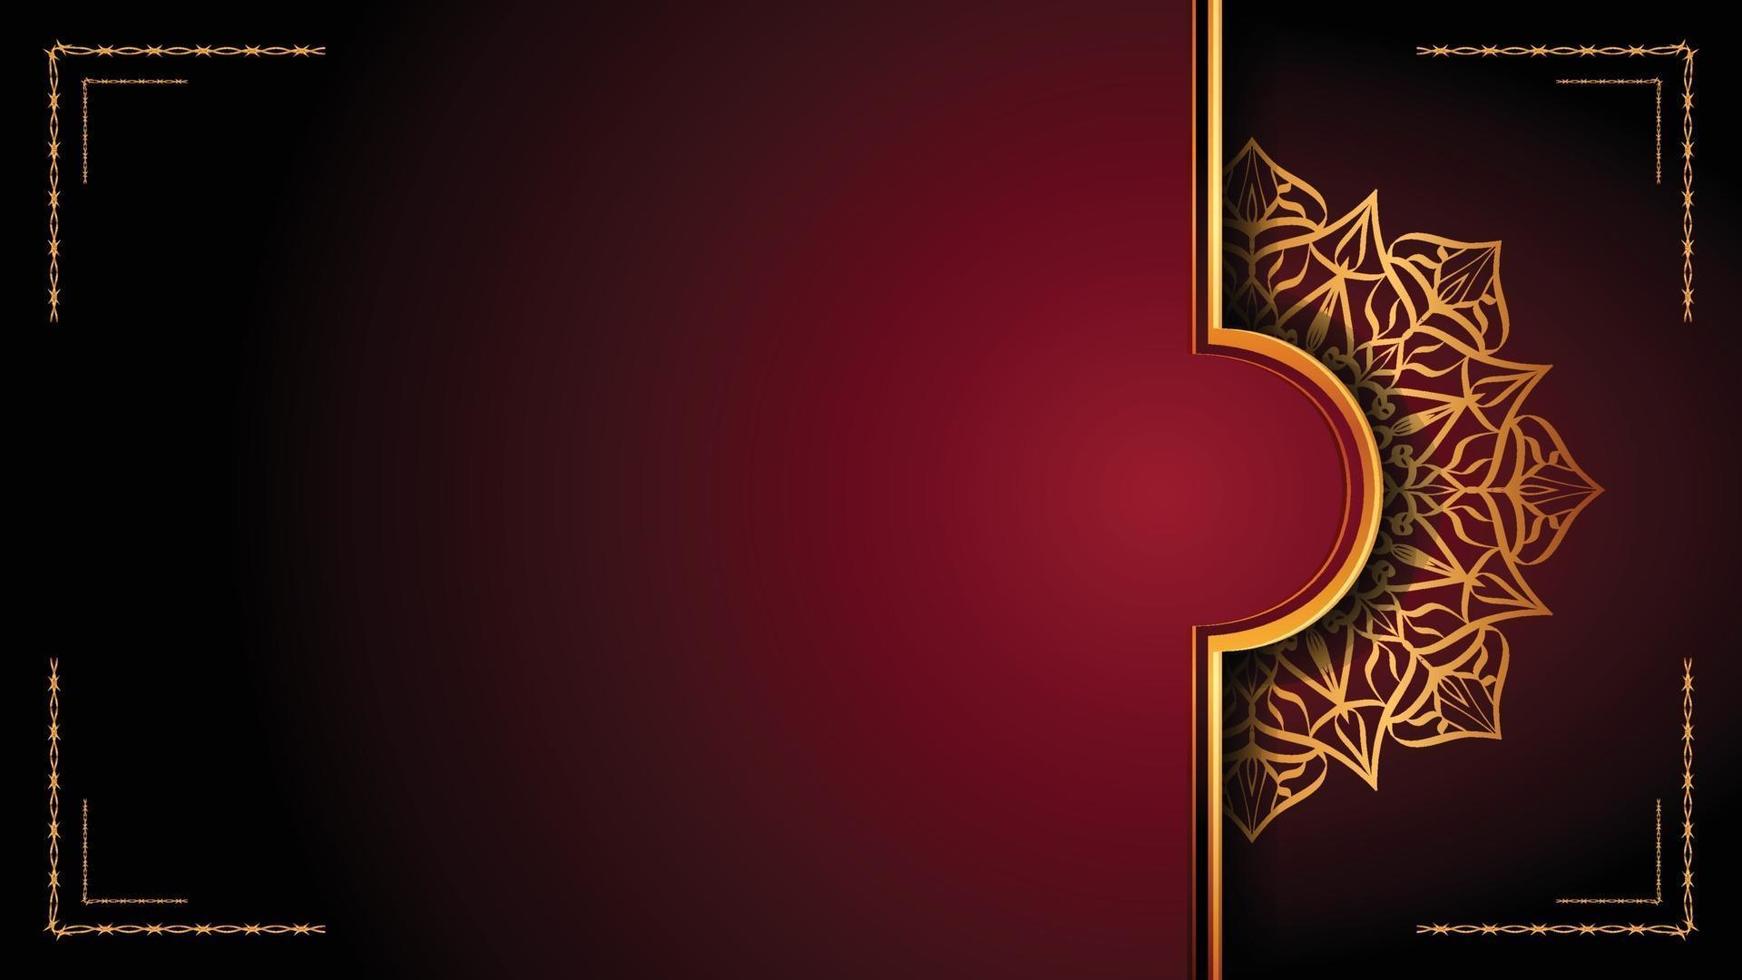 Luxury Mandala Ornamental Background Design With Golden Arabesque Pattern Style. Decorative Mandala Ornament For Print, Brochure, Banner, Cover, Poster, Invitation Card. vector